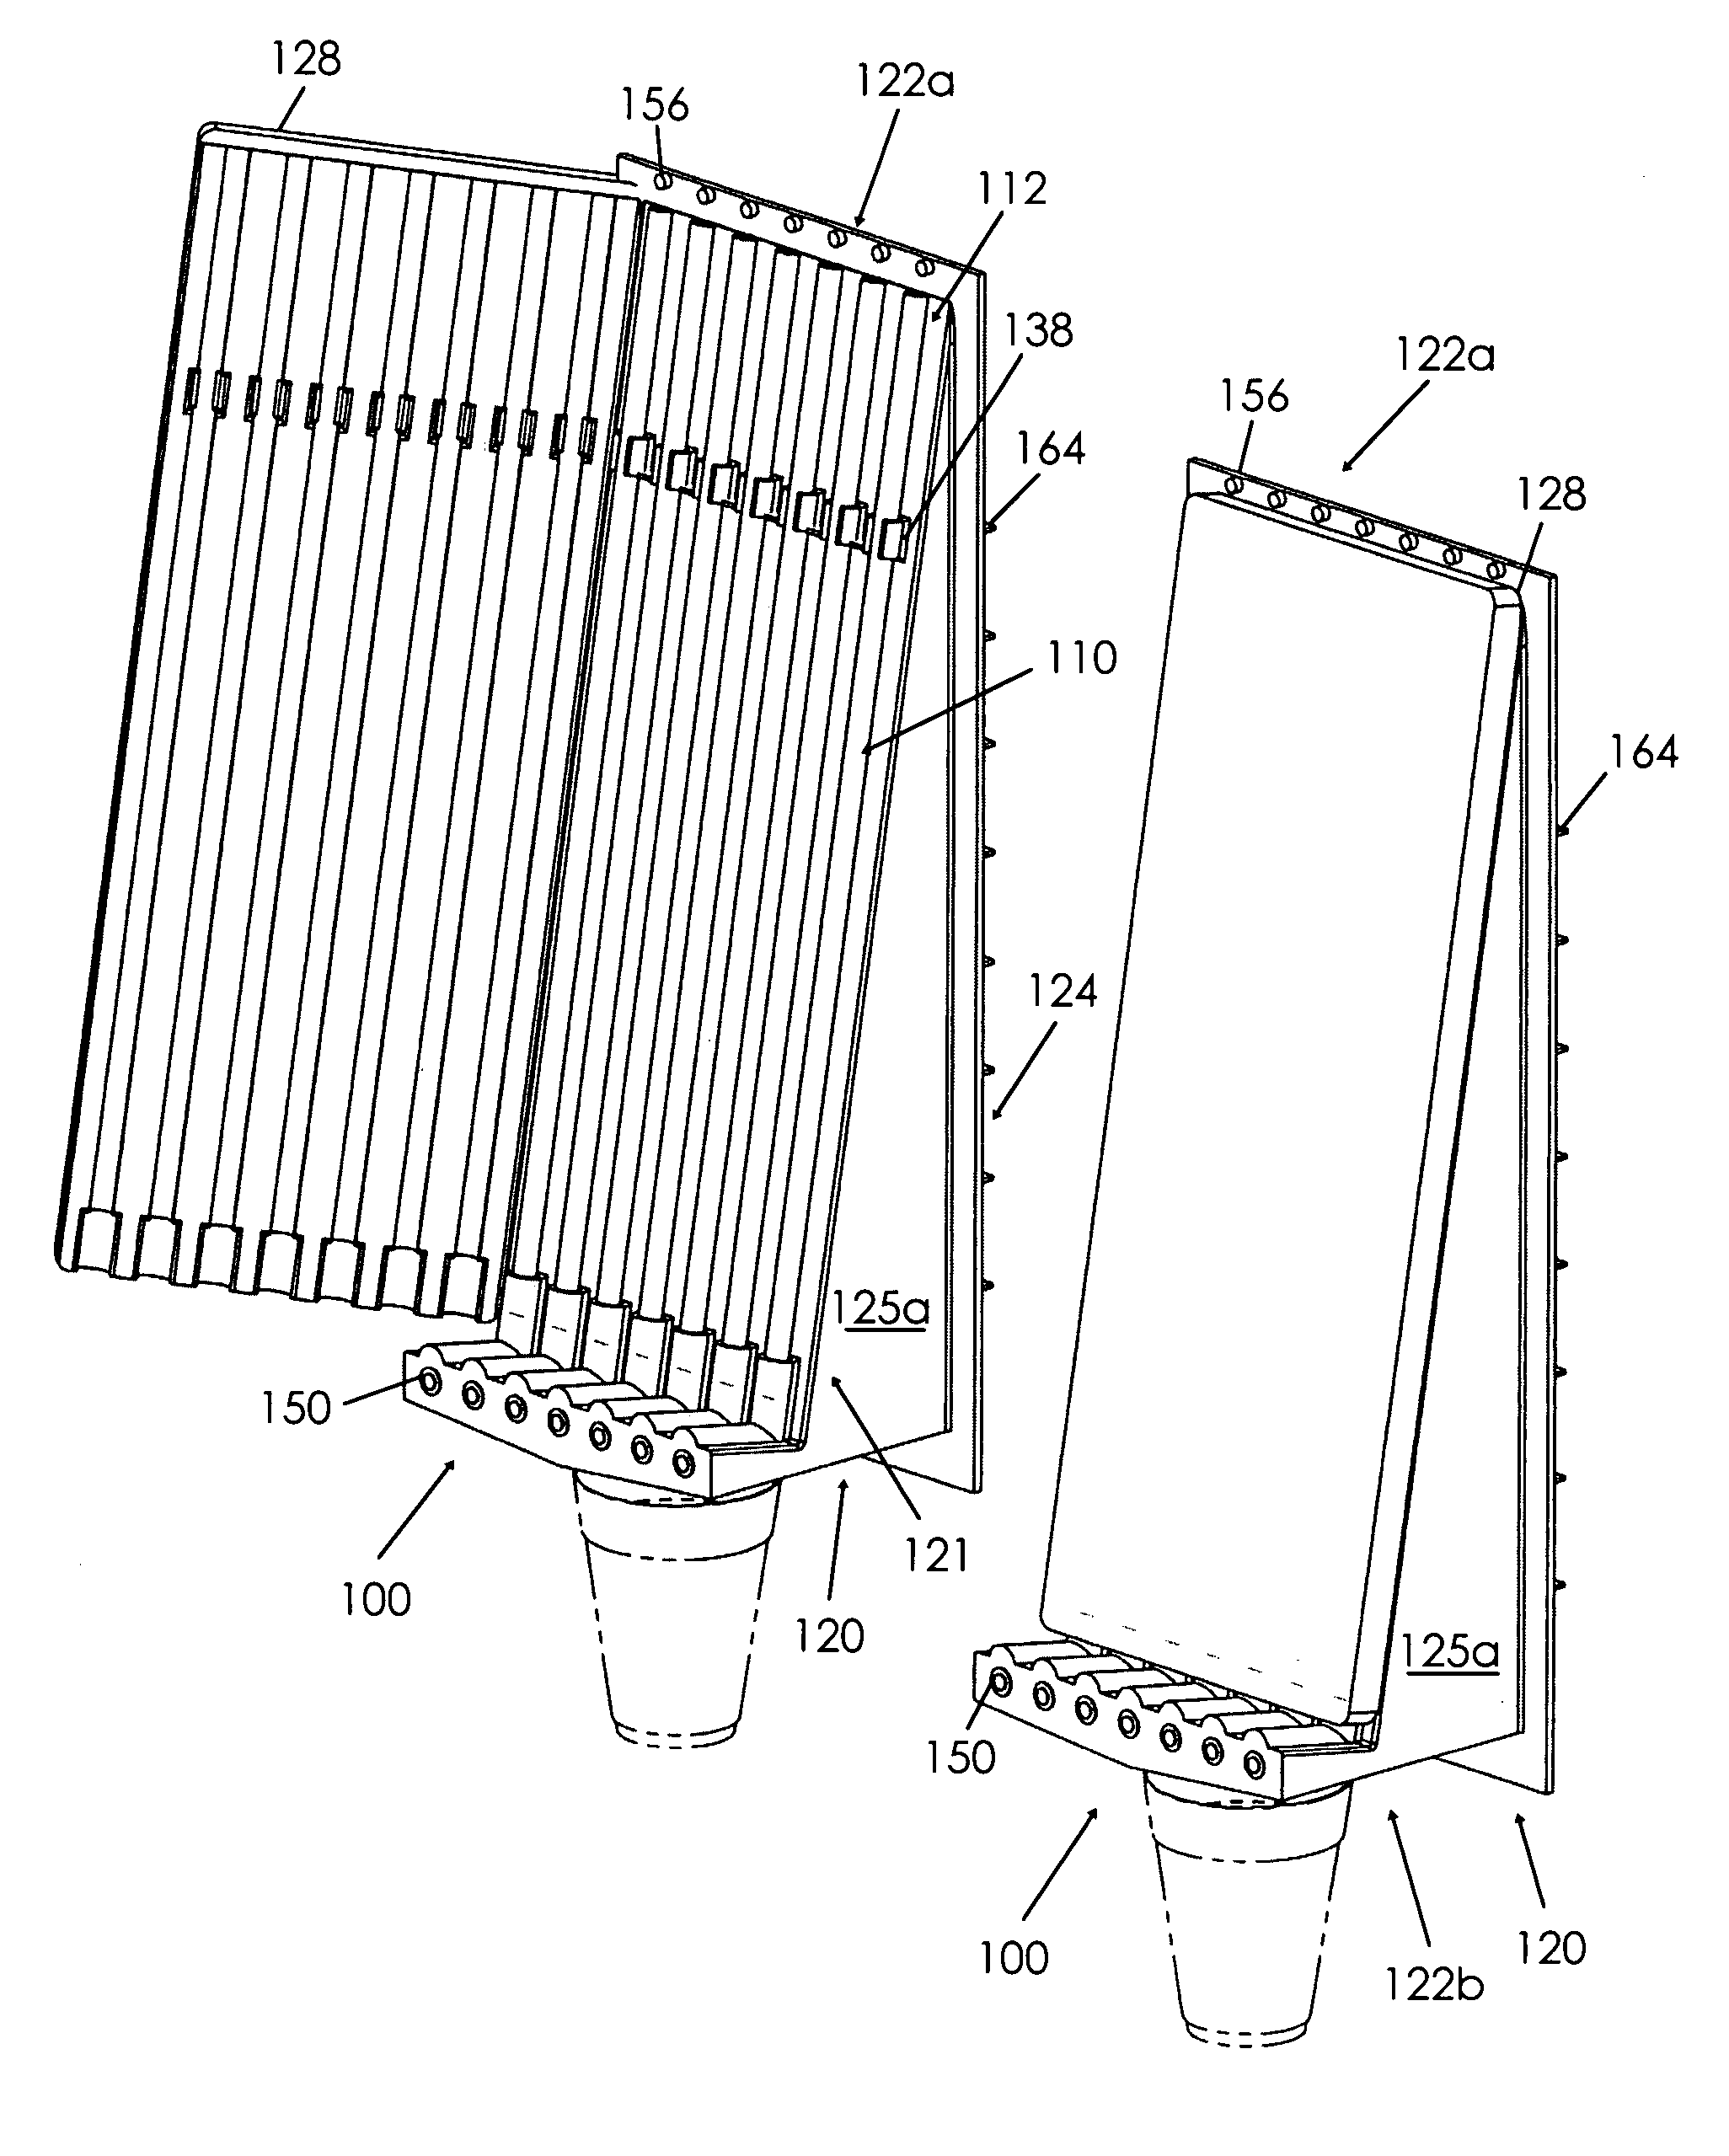 Capsule dispensing apparatus with refrigeration